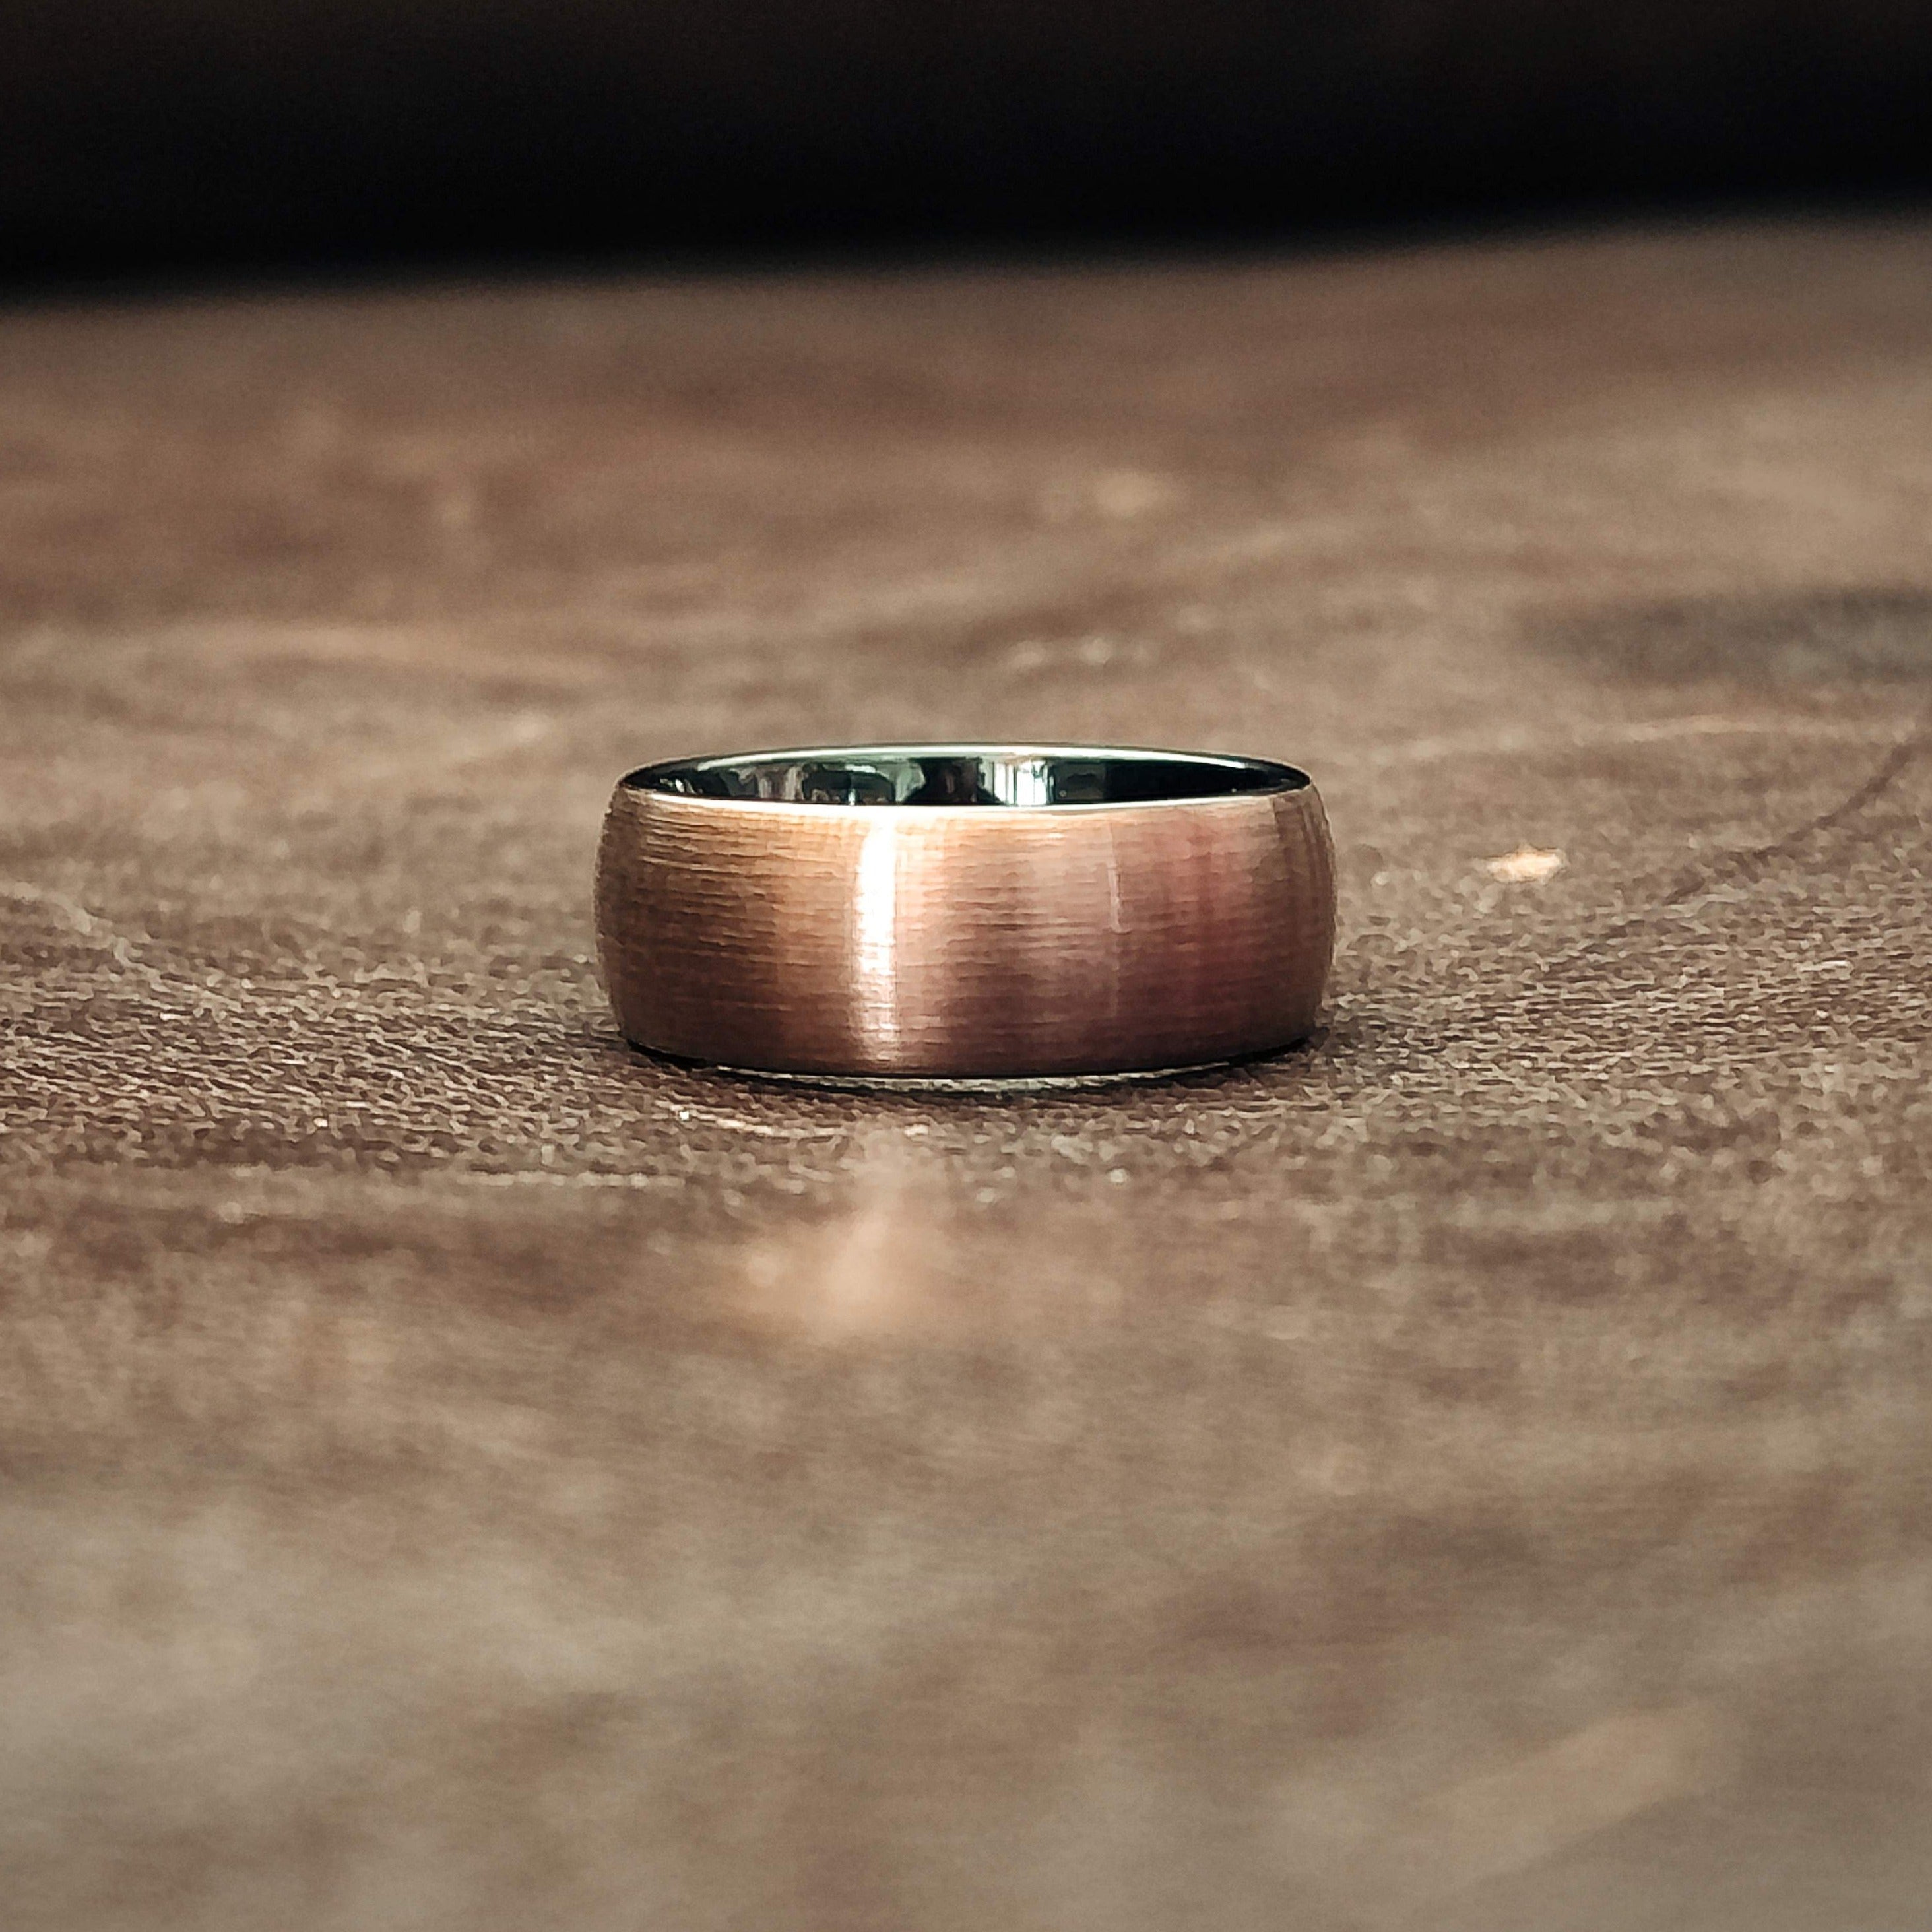 Men's Tungsten Gear Ring for Fidgeting 8 mm - My Anxiety Ring